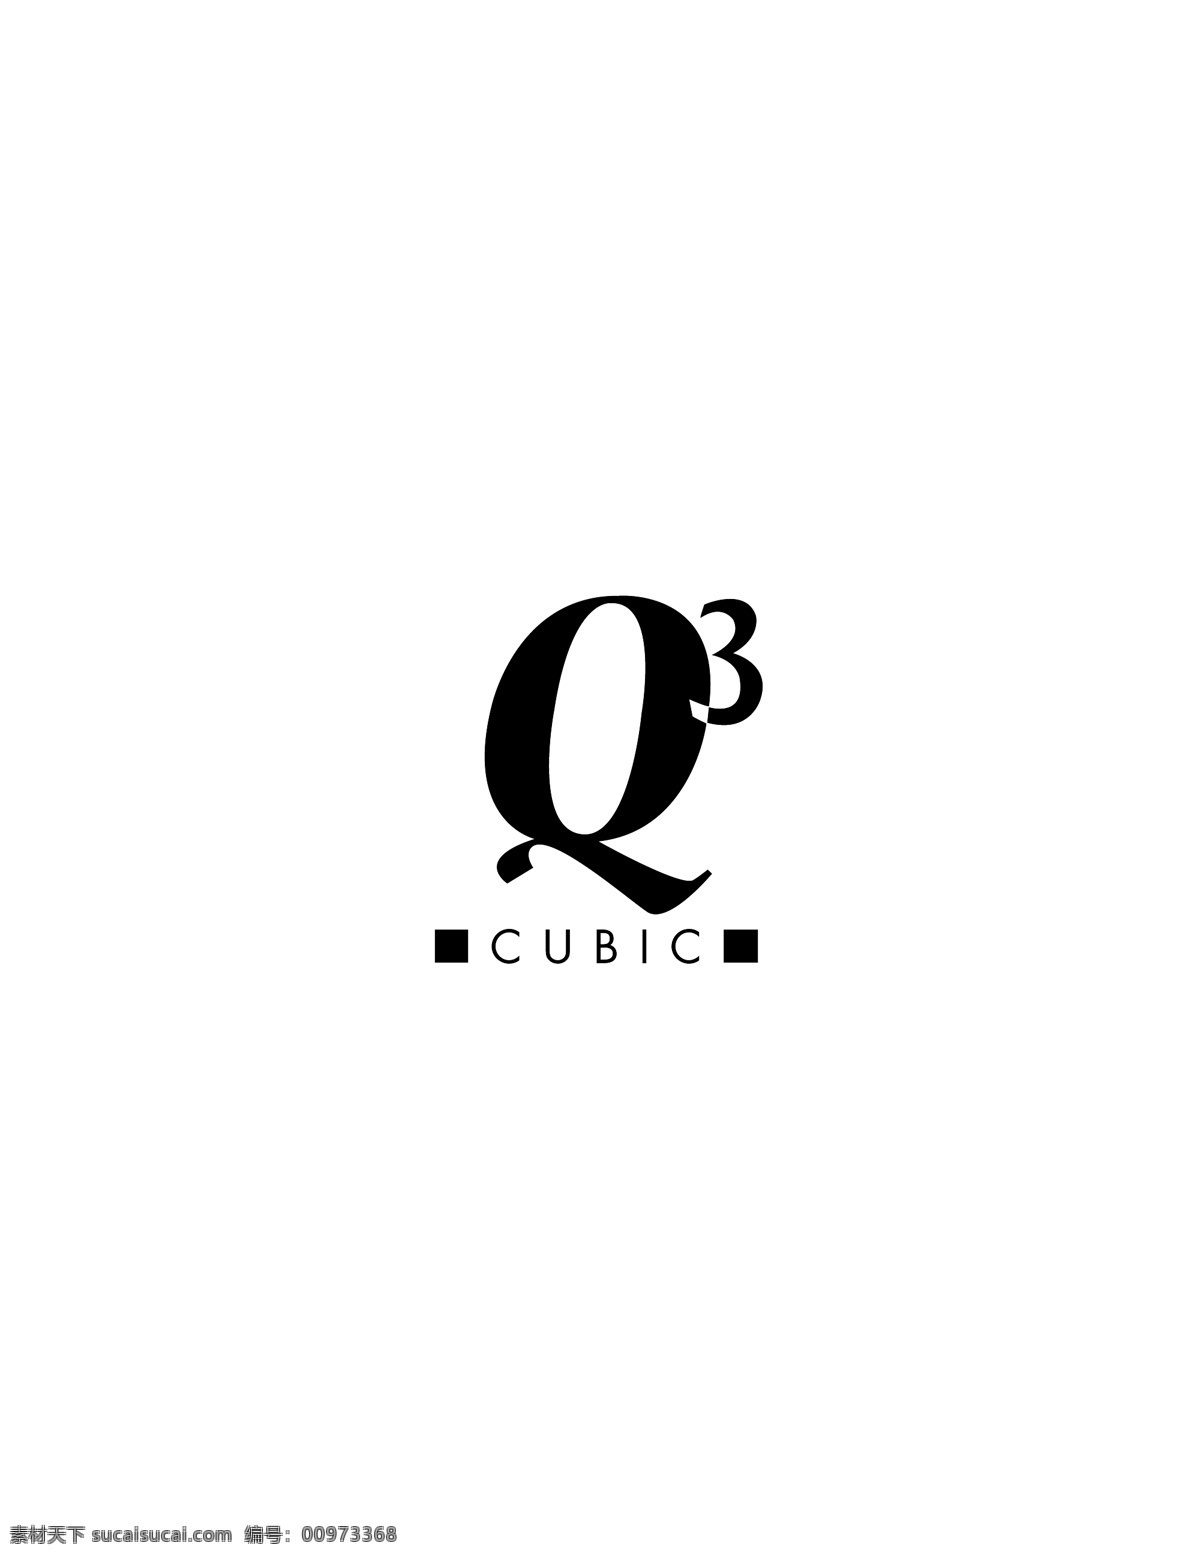 logo大全 logo 设计欣赏 商业矢量 矢量下载 q3 cubic 传统 企业 标志设计 欣赏 网页矢量 矢量图 其他矢量图